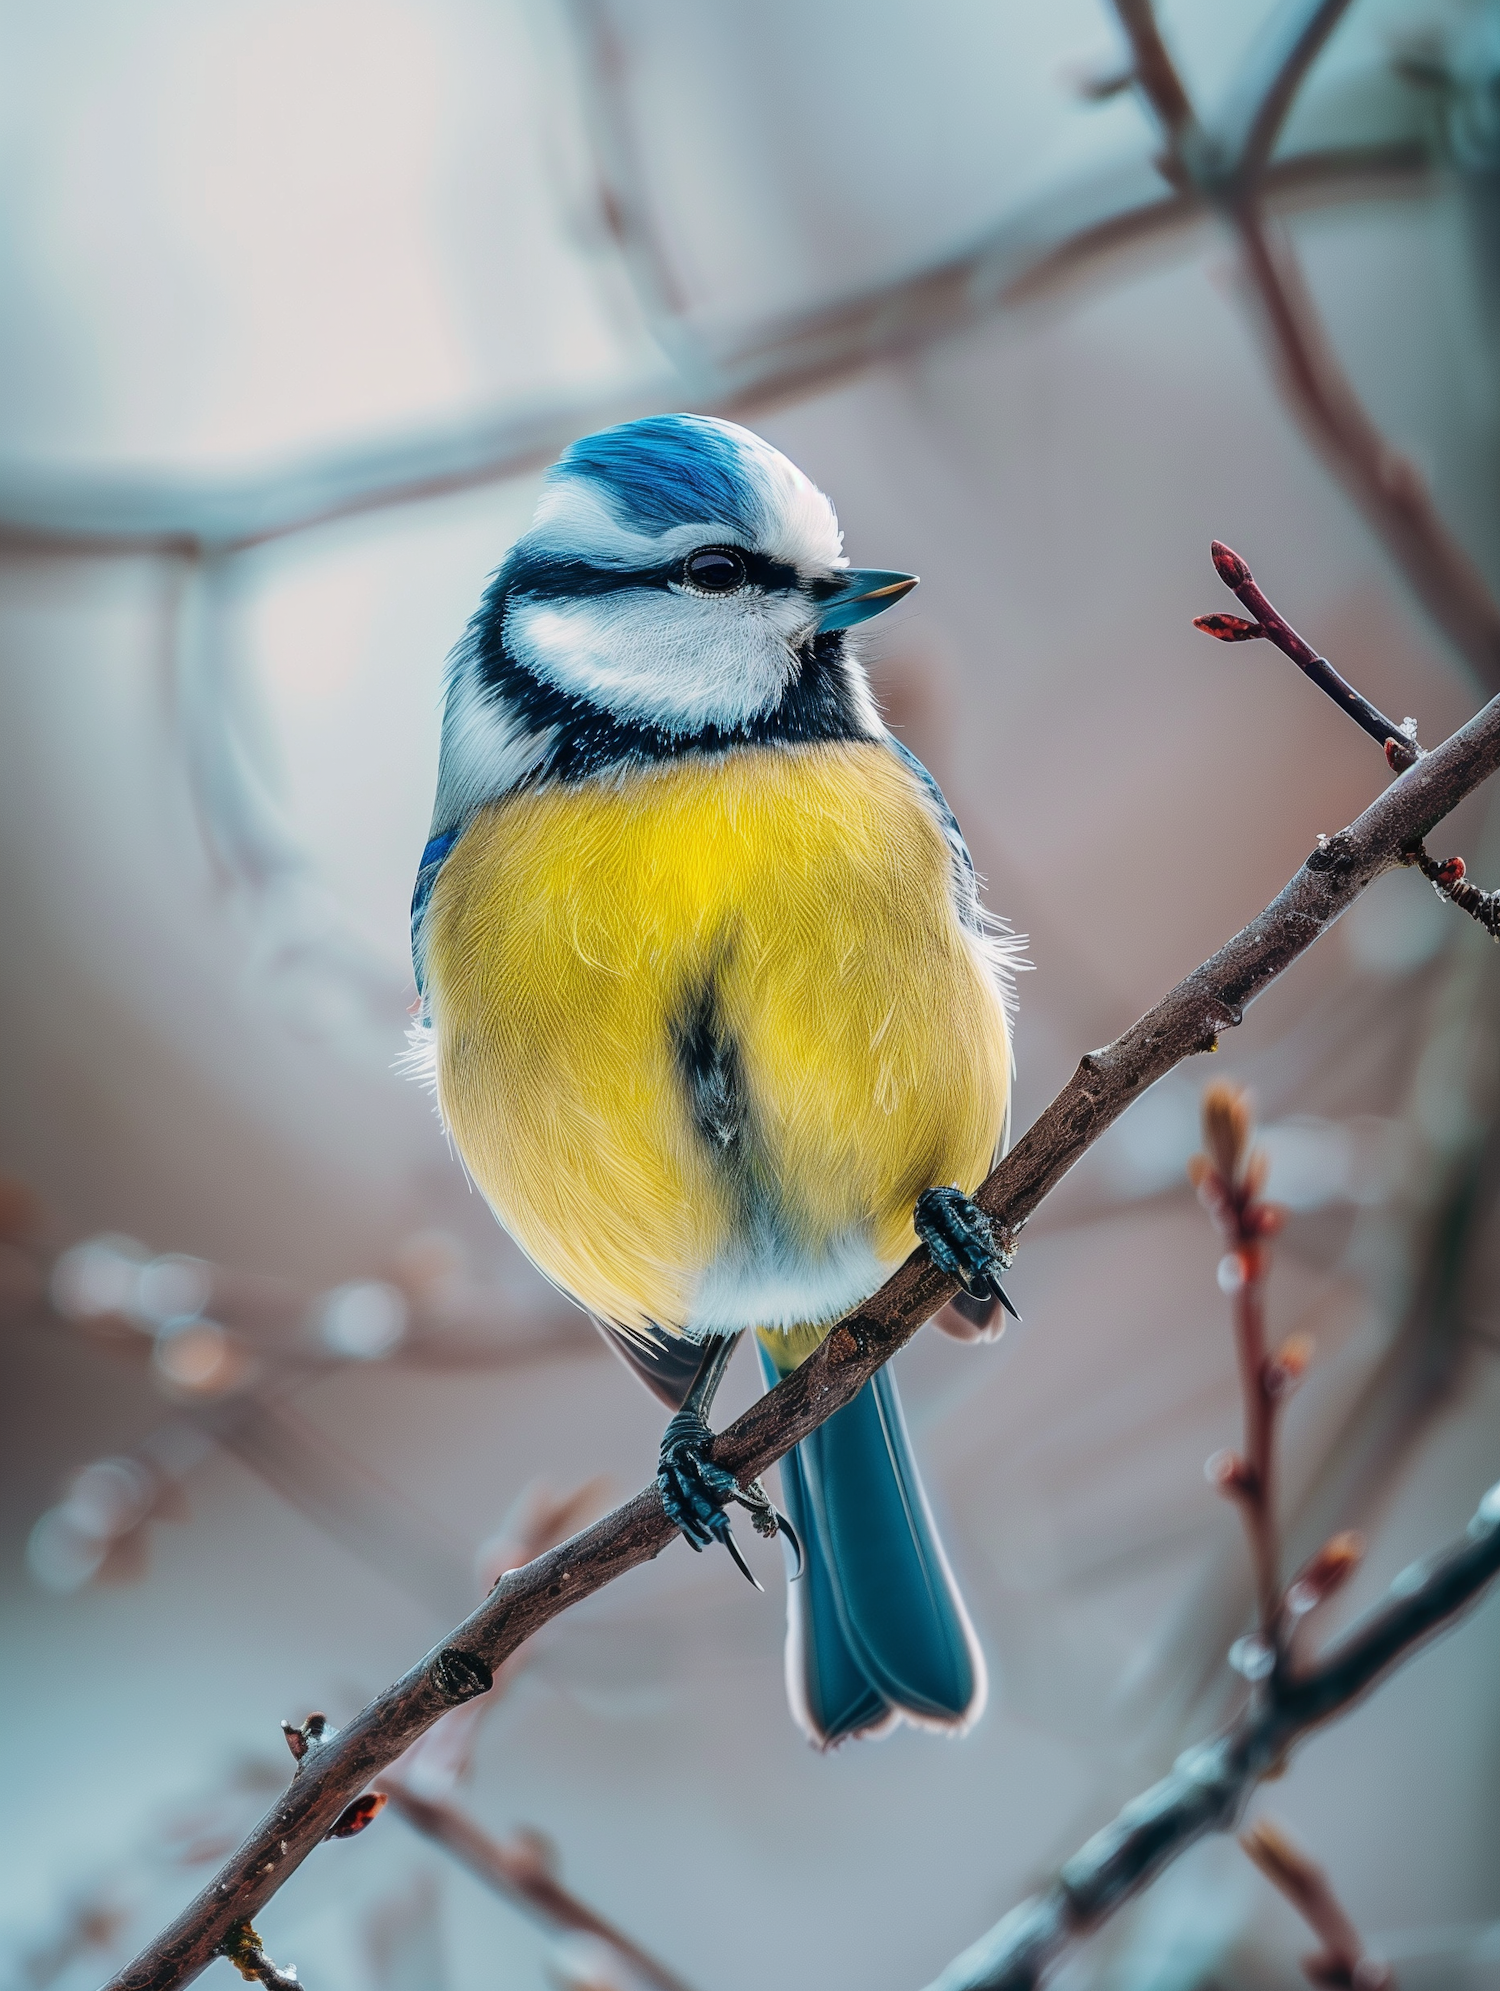 Vibrant Blue Tit Bird on Branch